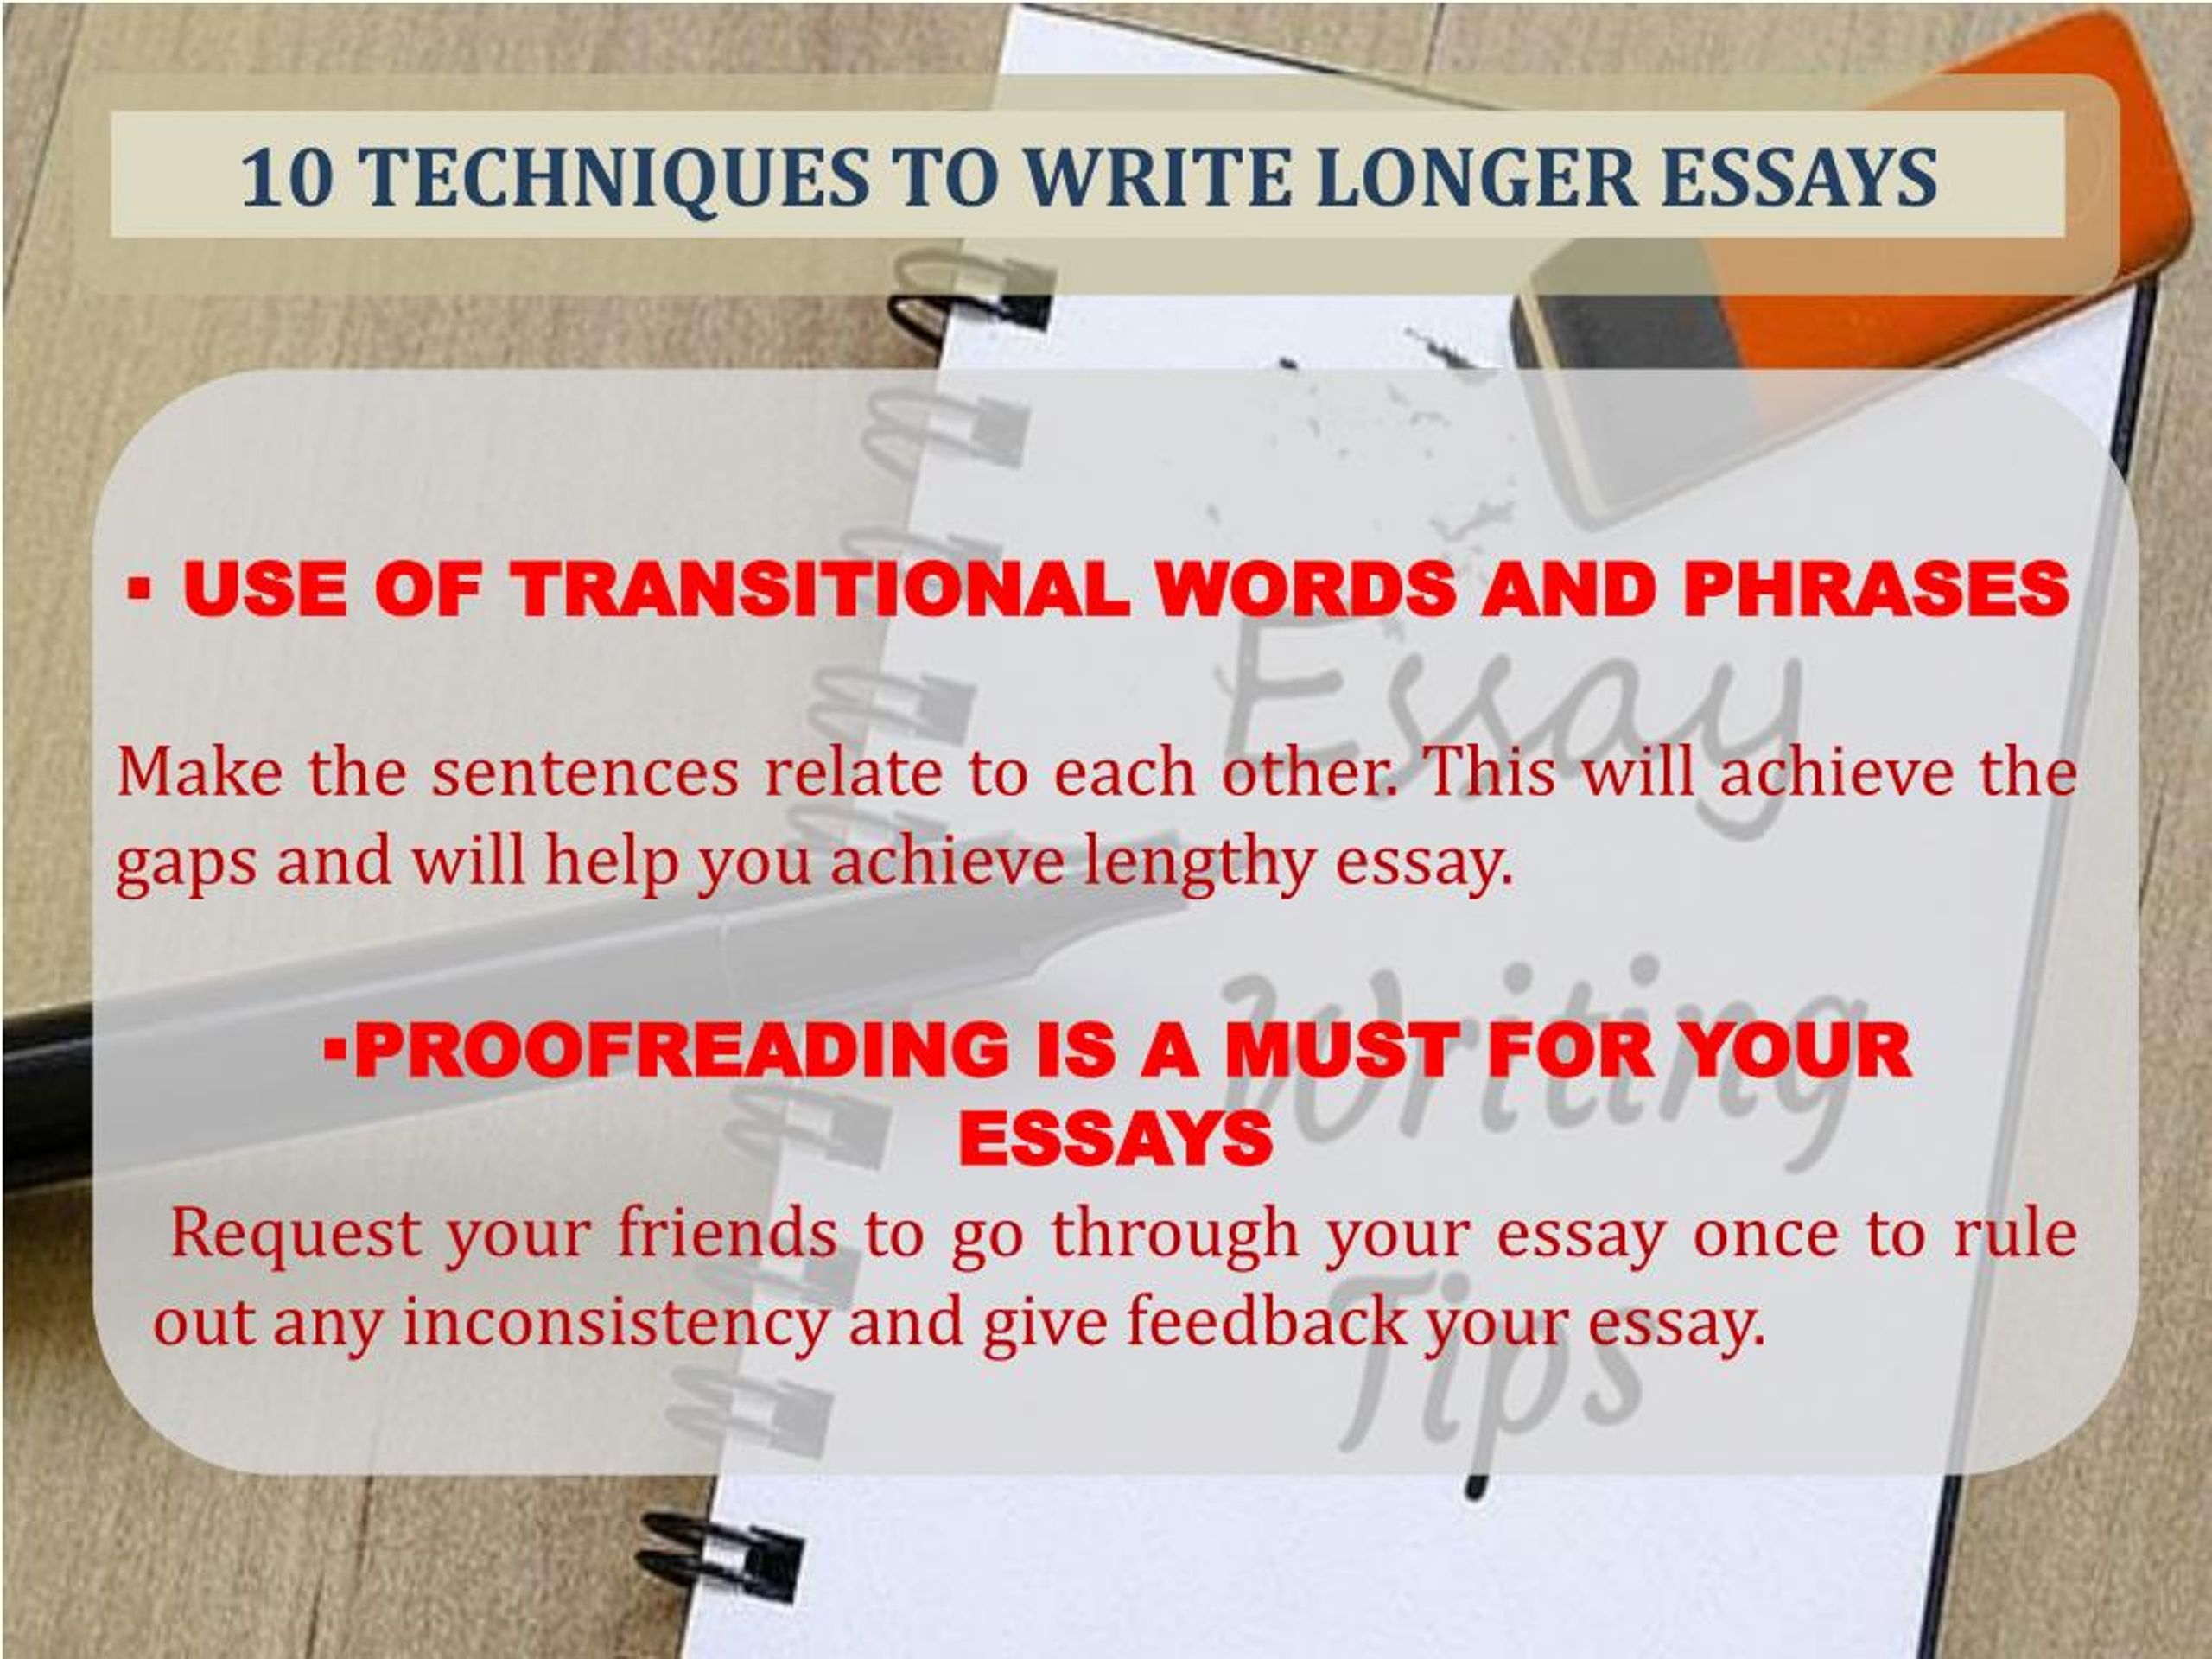 to write longer essays